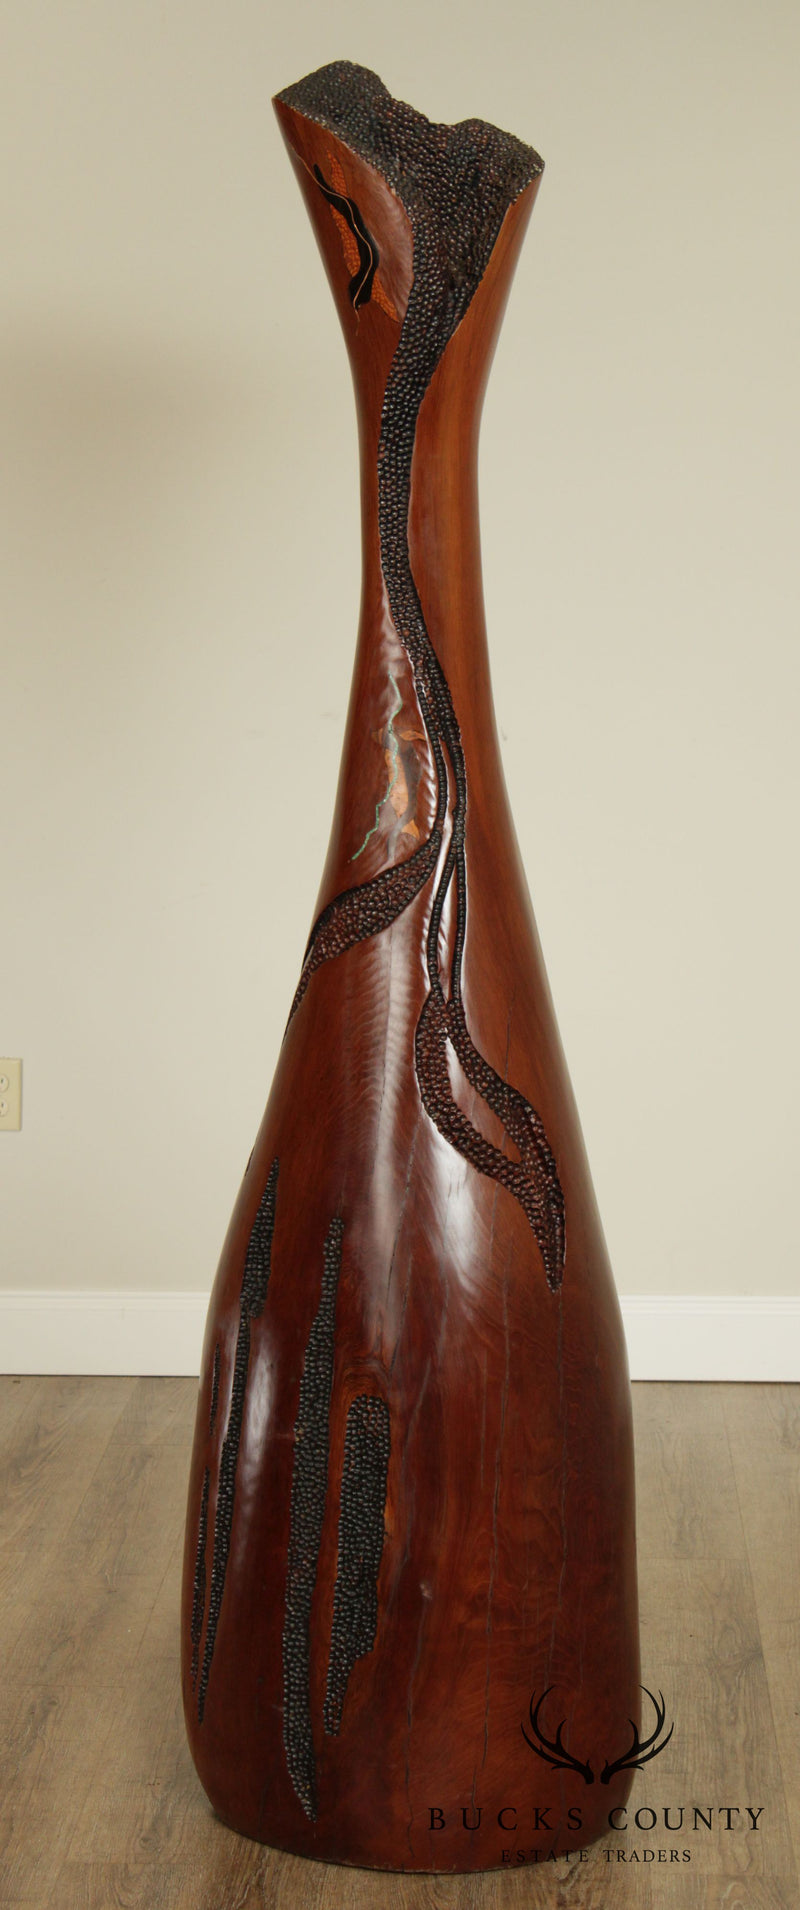 Monumental Abstract Polished Walnut Sculpture, Tall Slender Vase Form